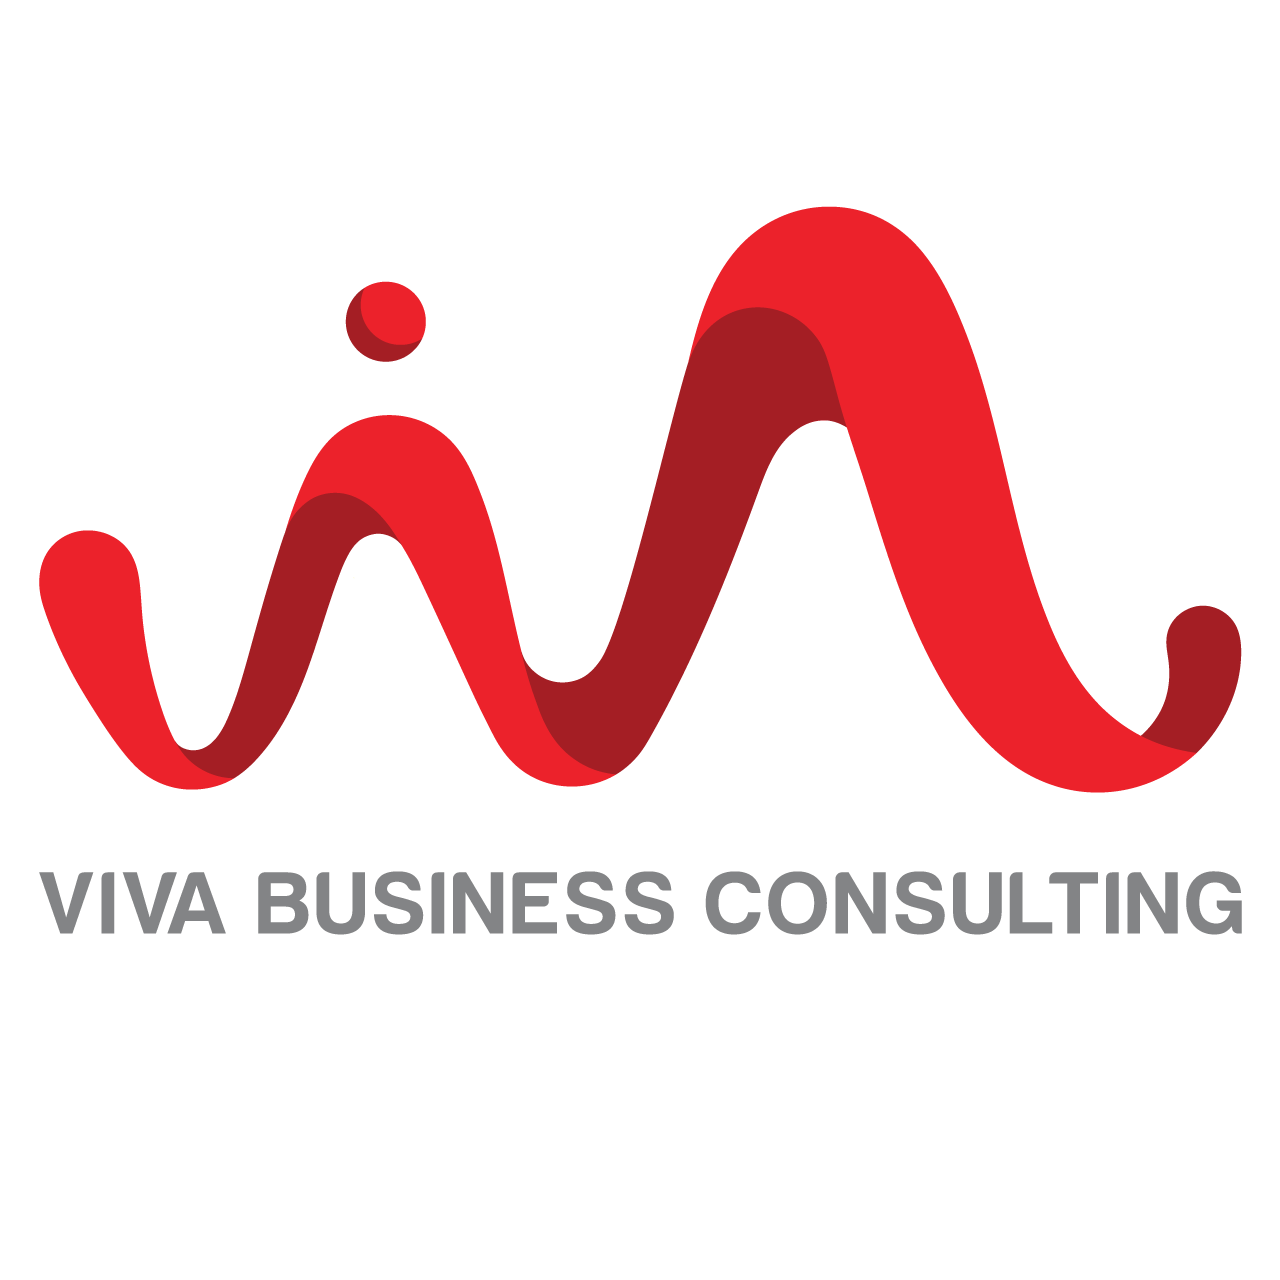 Viva main logo